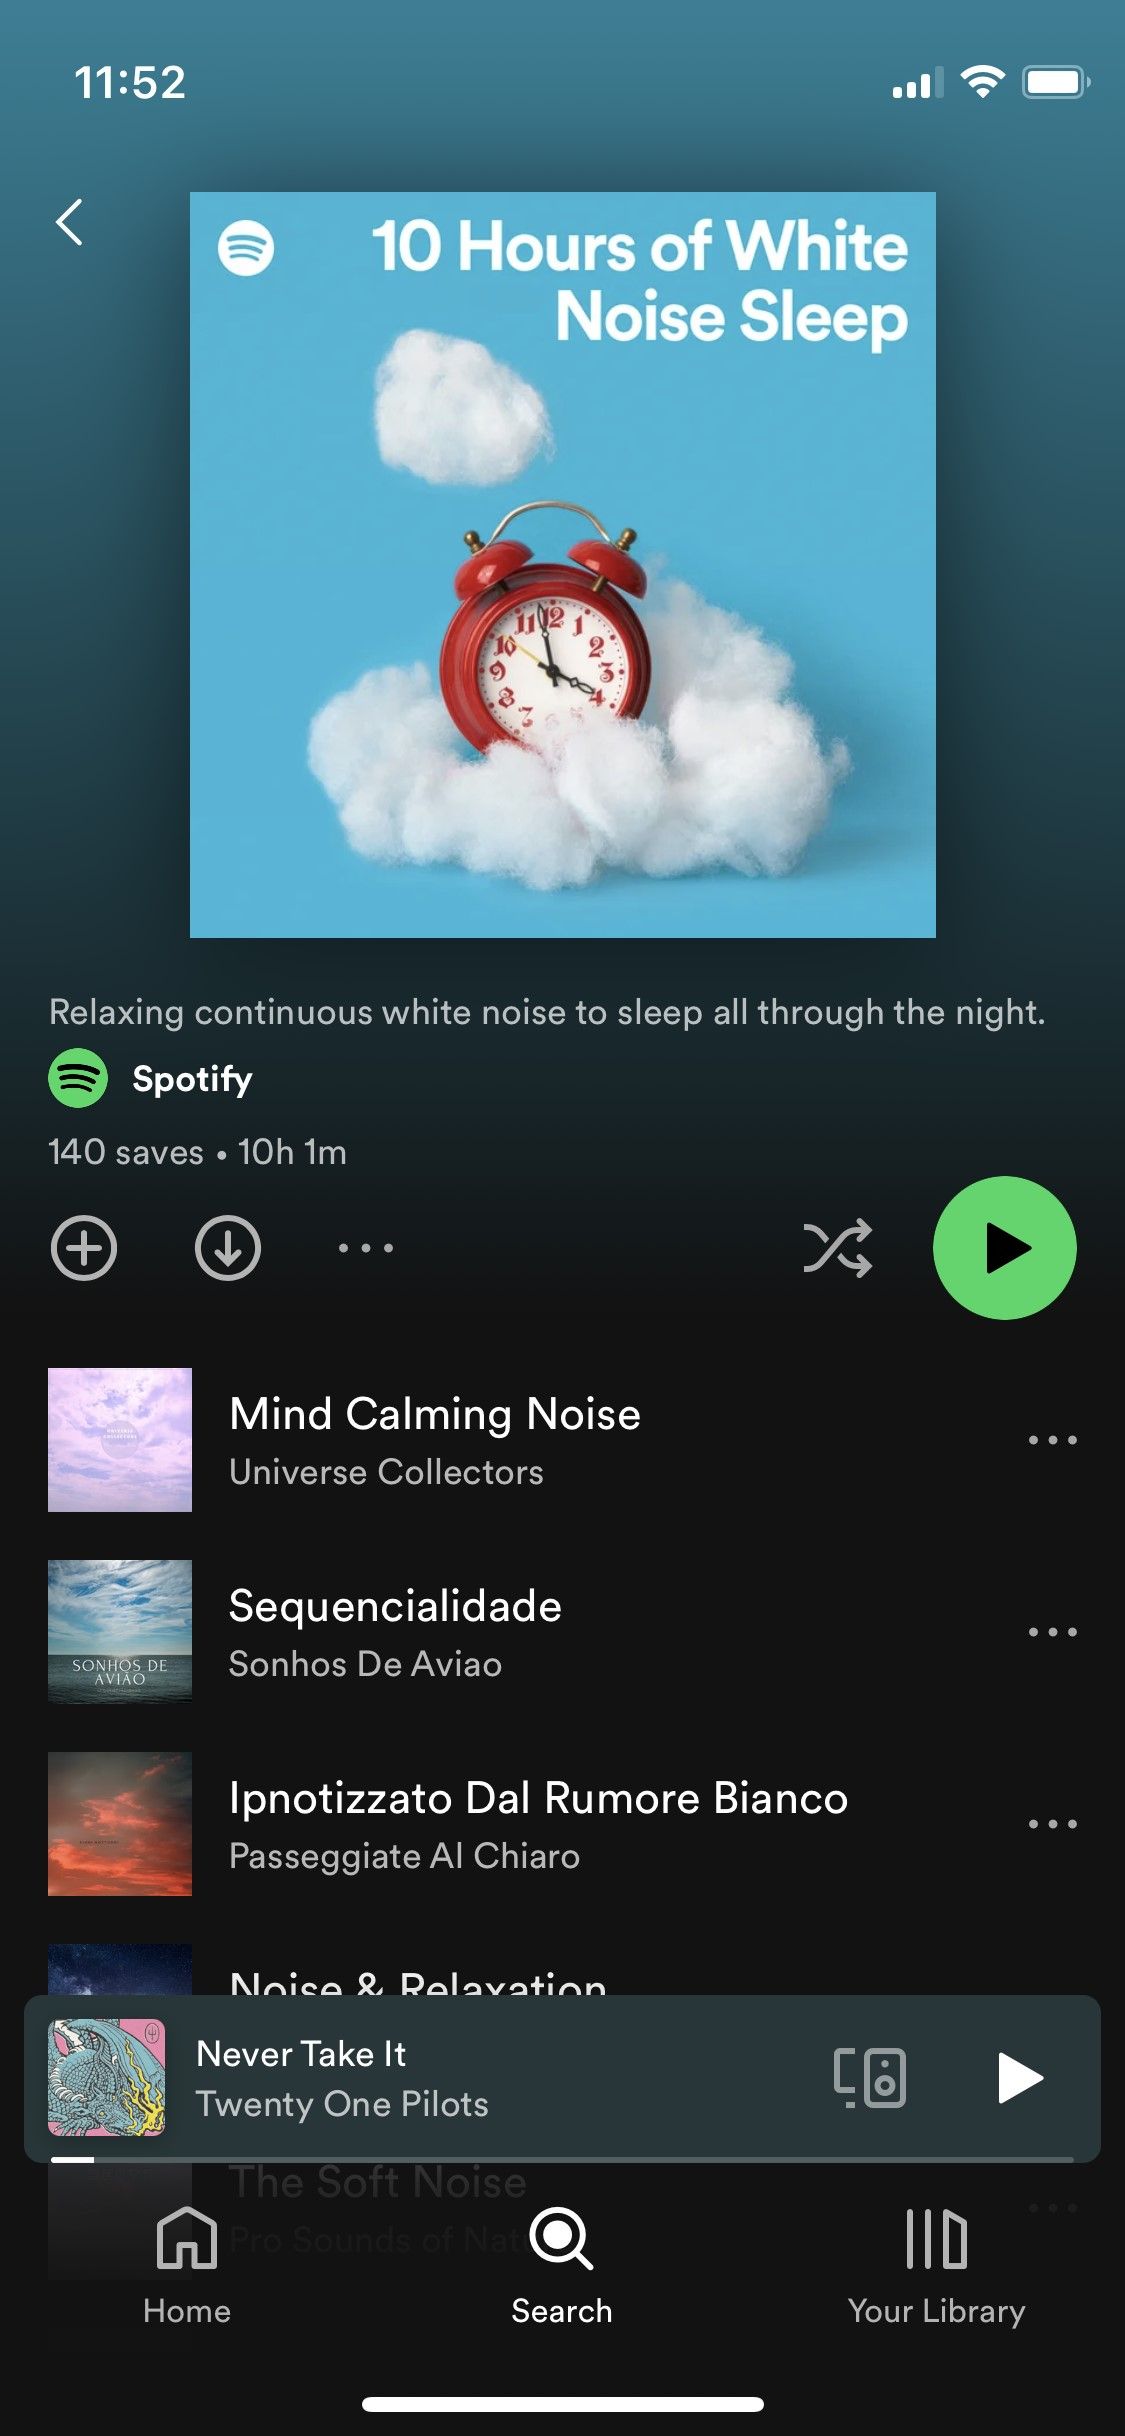 Spotify app screenshot of White Noise sleep playlist